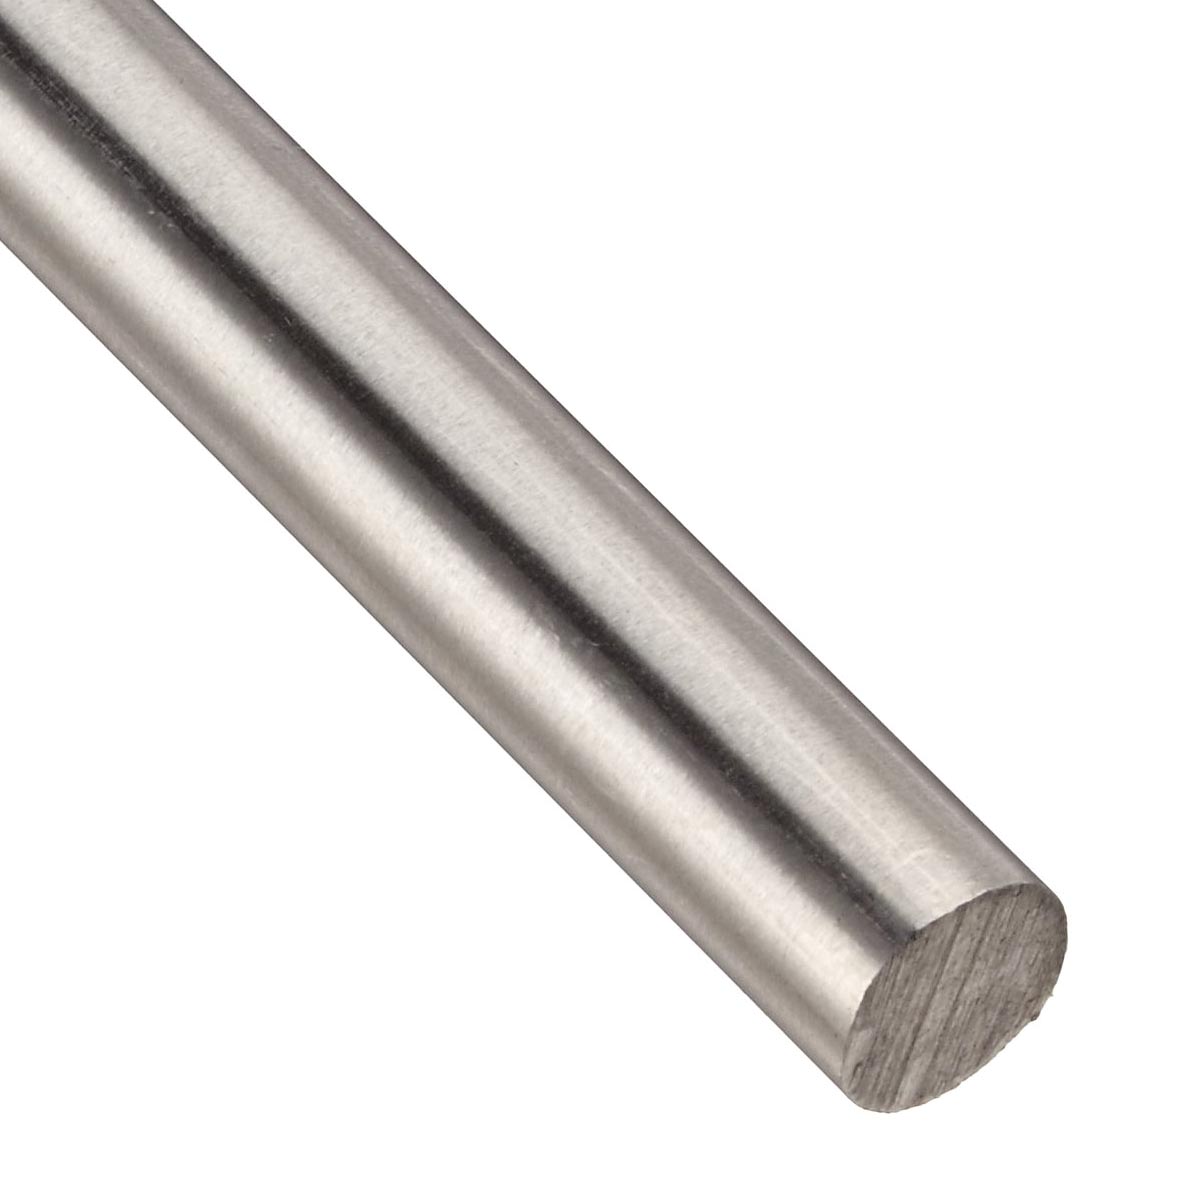 Stainless Steel Rod 100 mm - 1002932 - U15000 - Rods - 3B Scientific